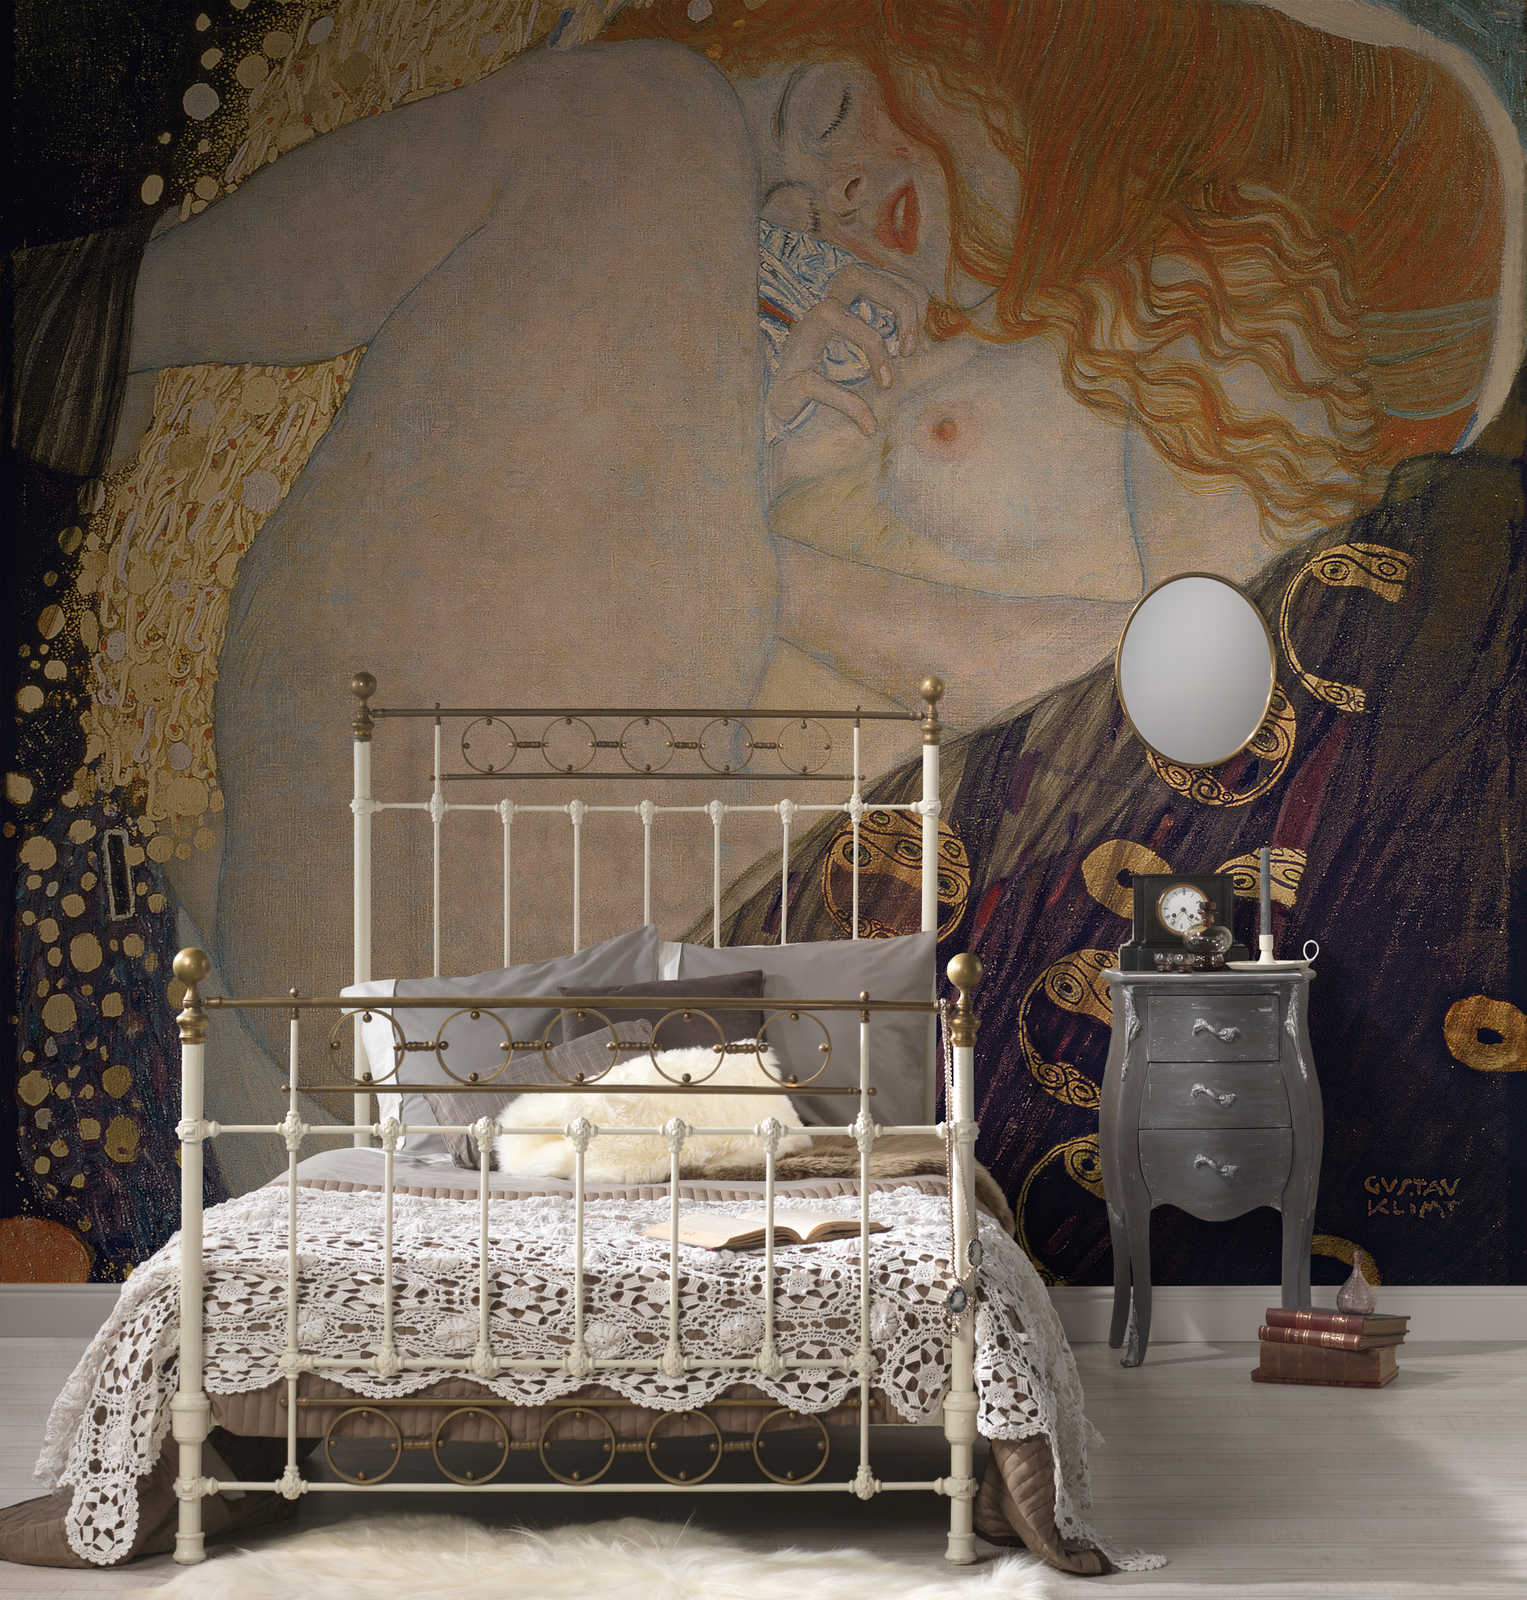             Muurschildering "Danae" van Gustav Klimt
        